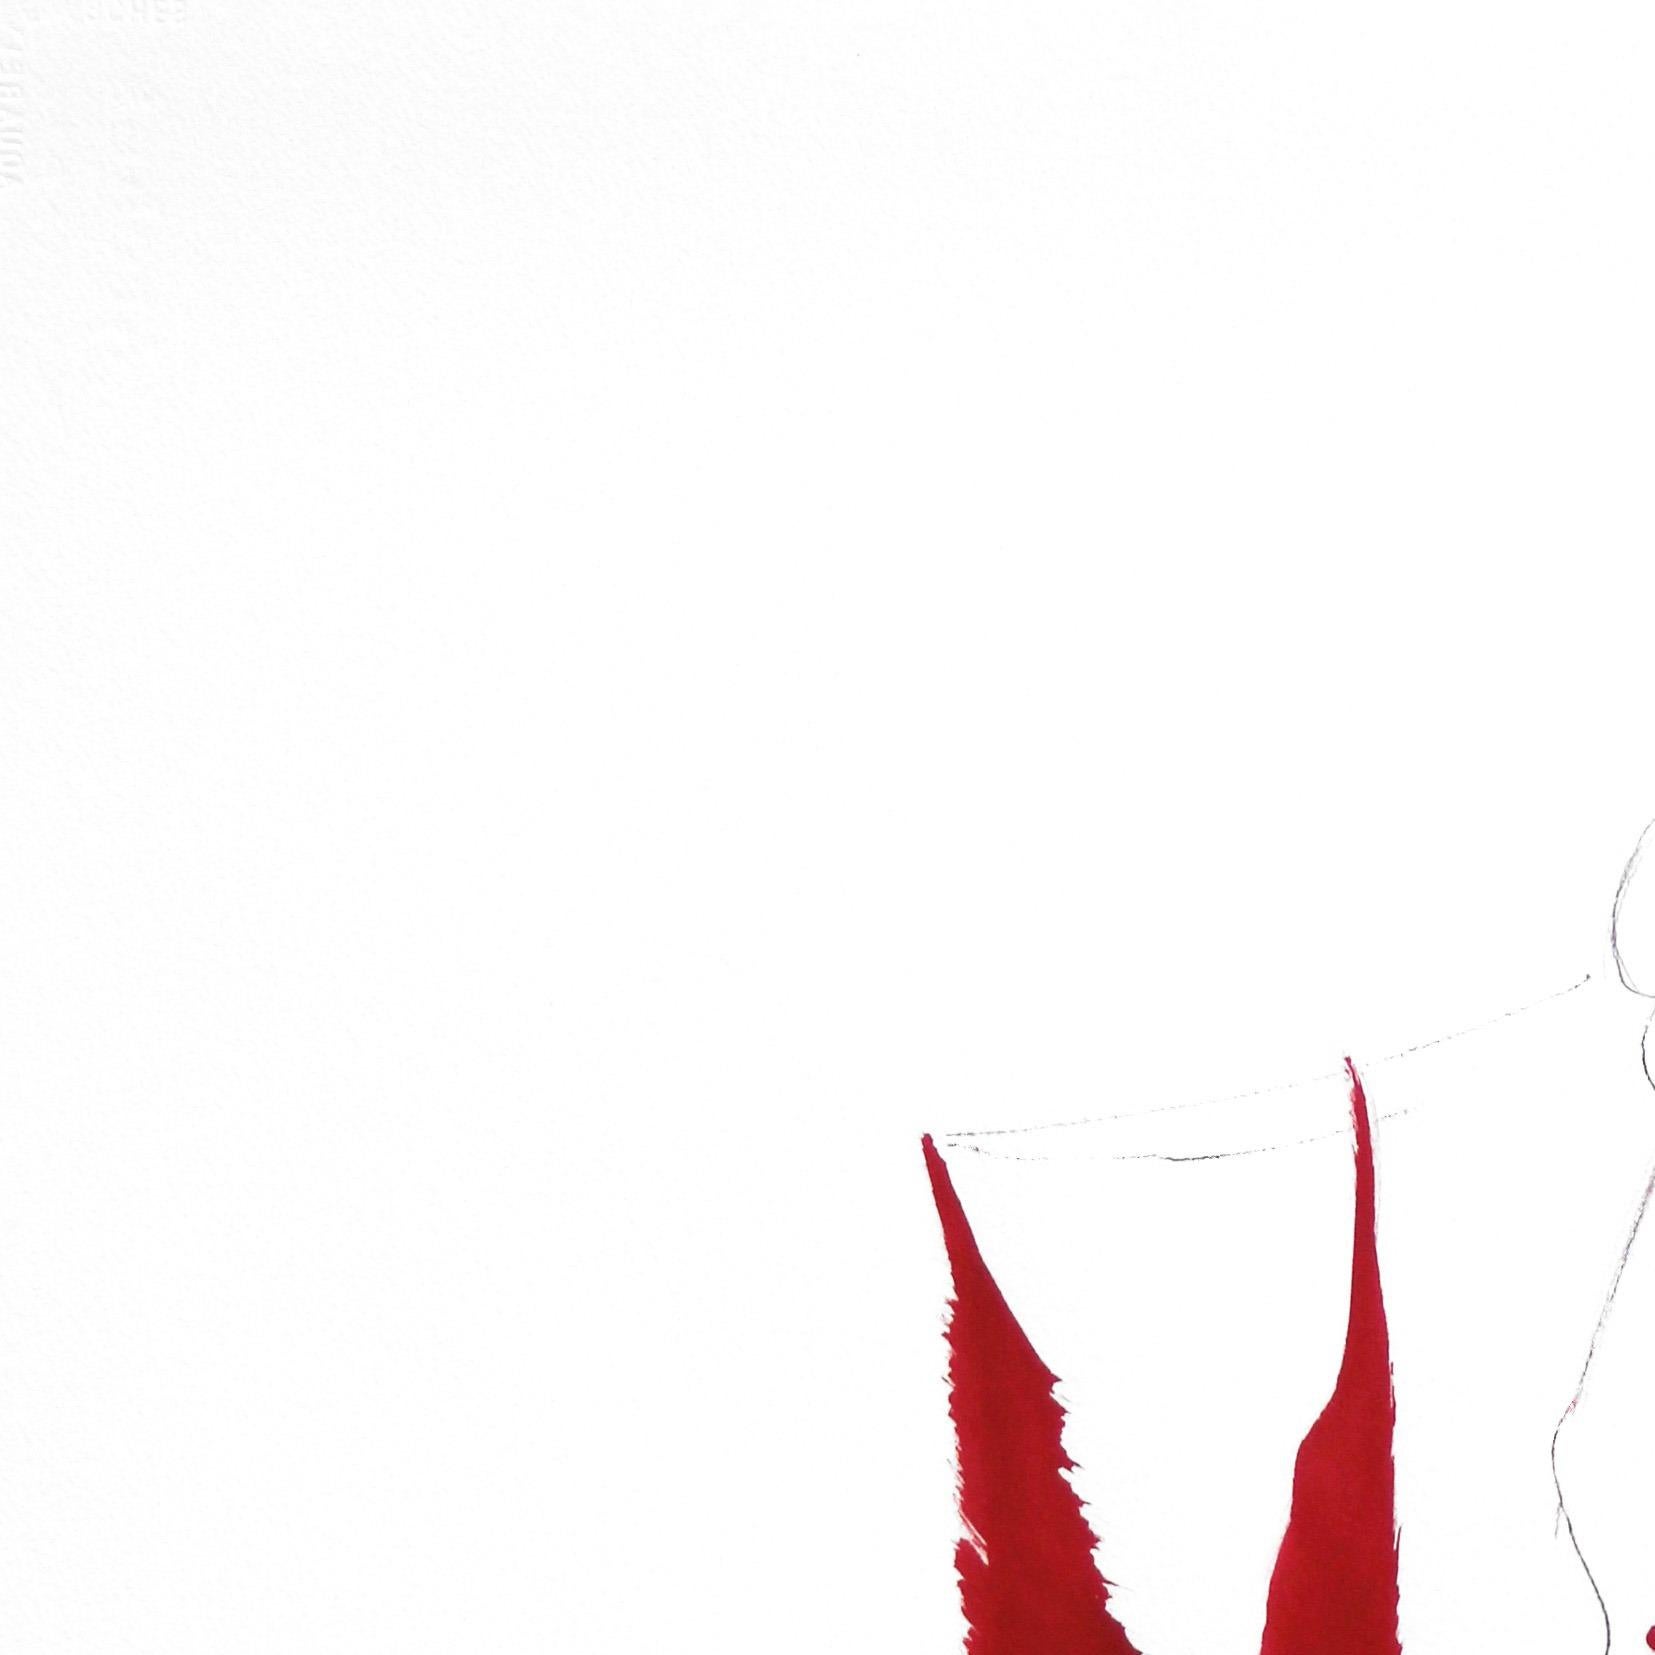 The Red Cloth 91 - Abstract Mixed Media Art by Bettina Mauel